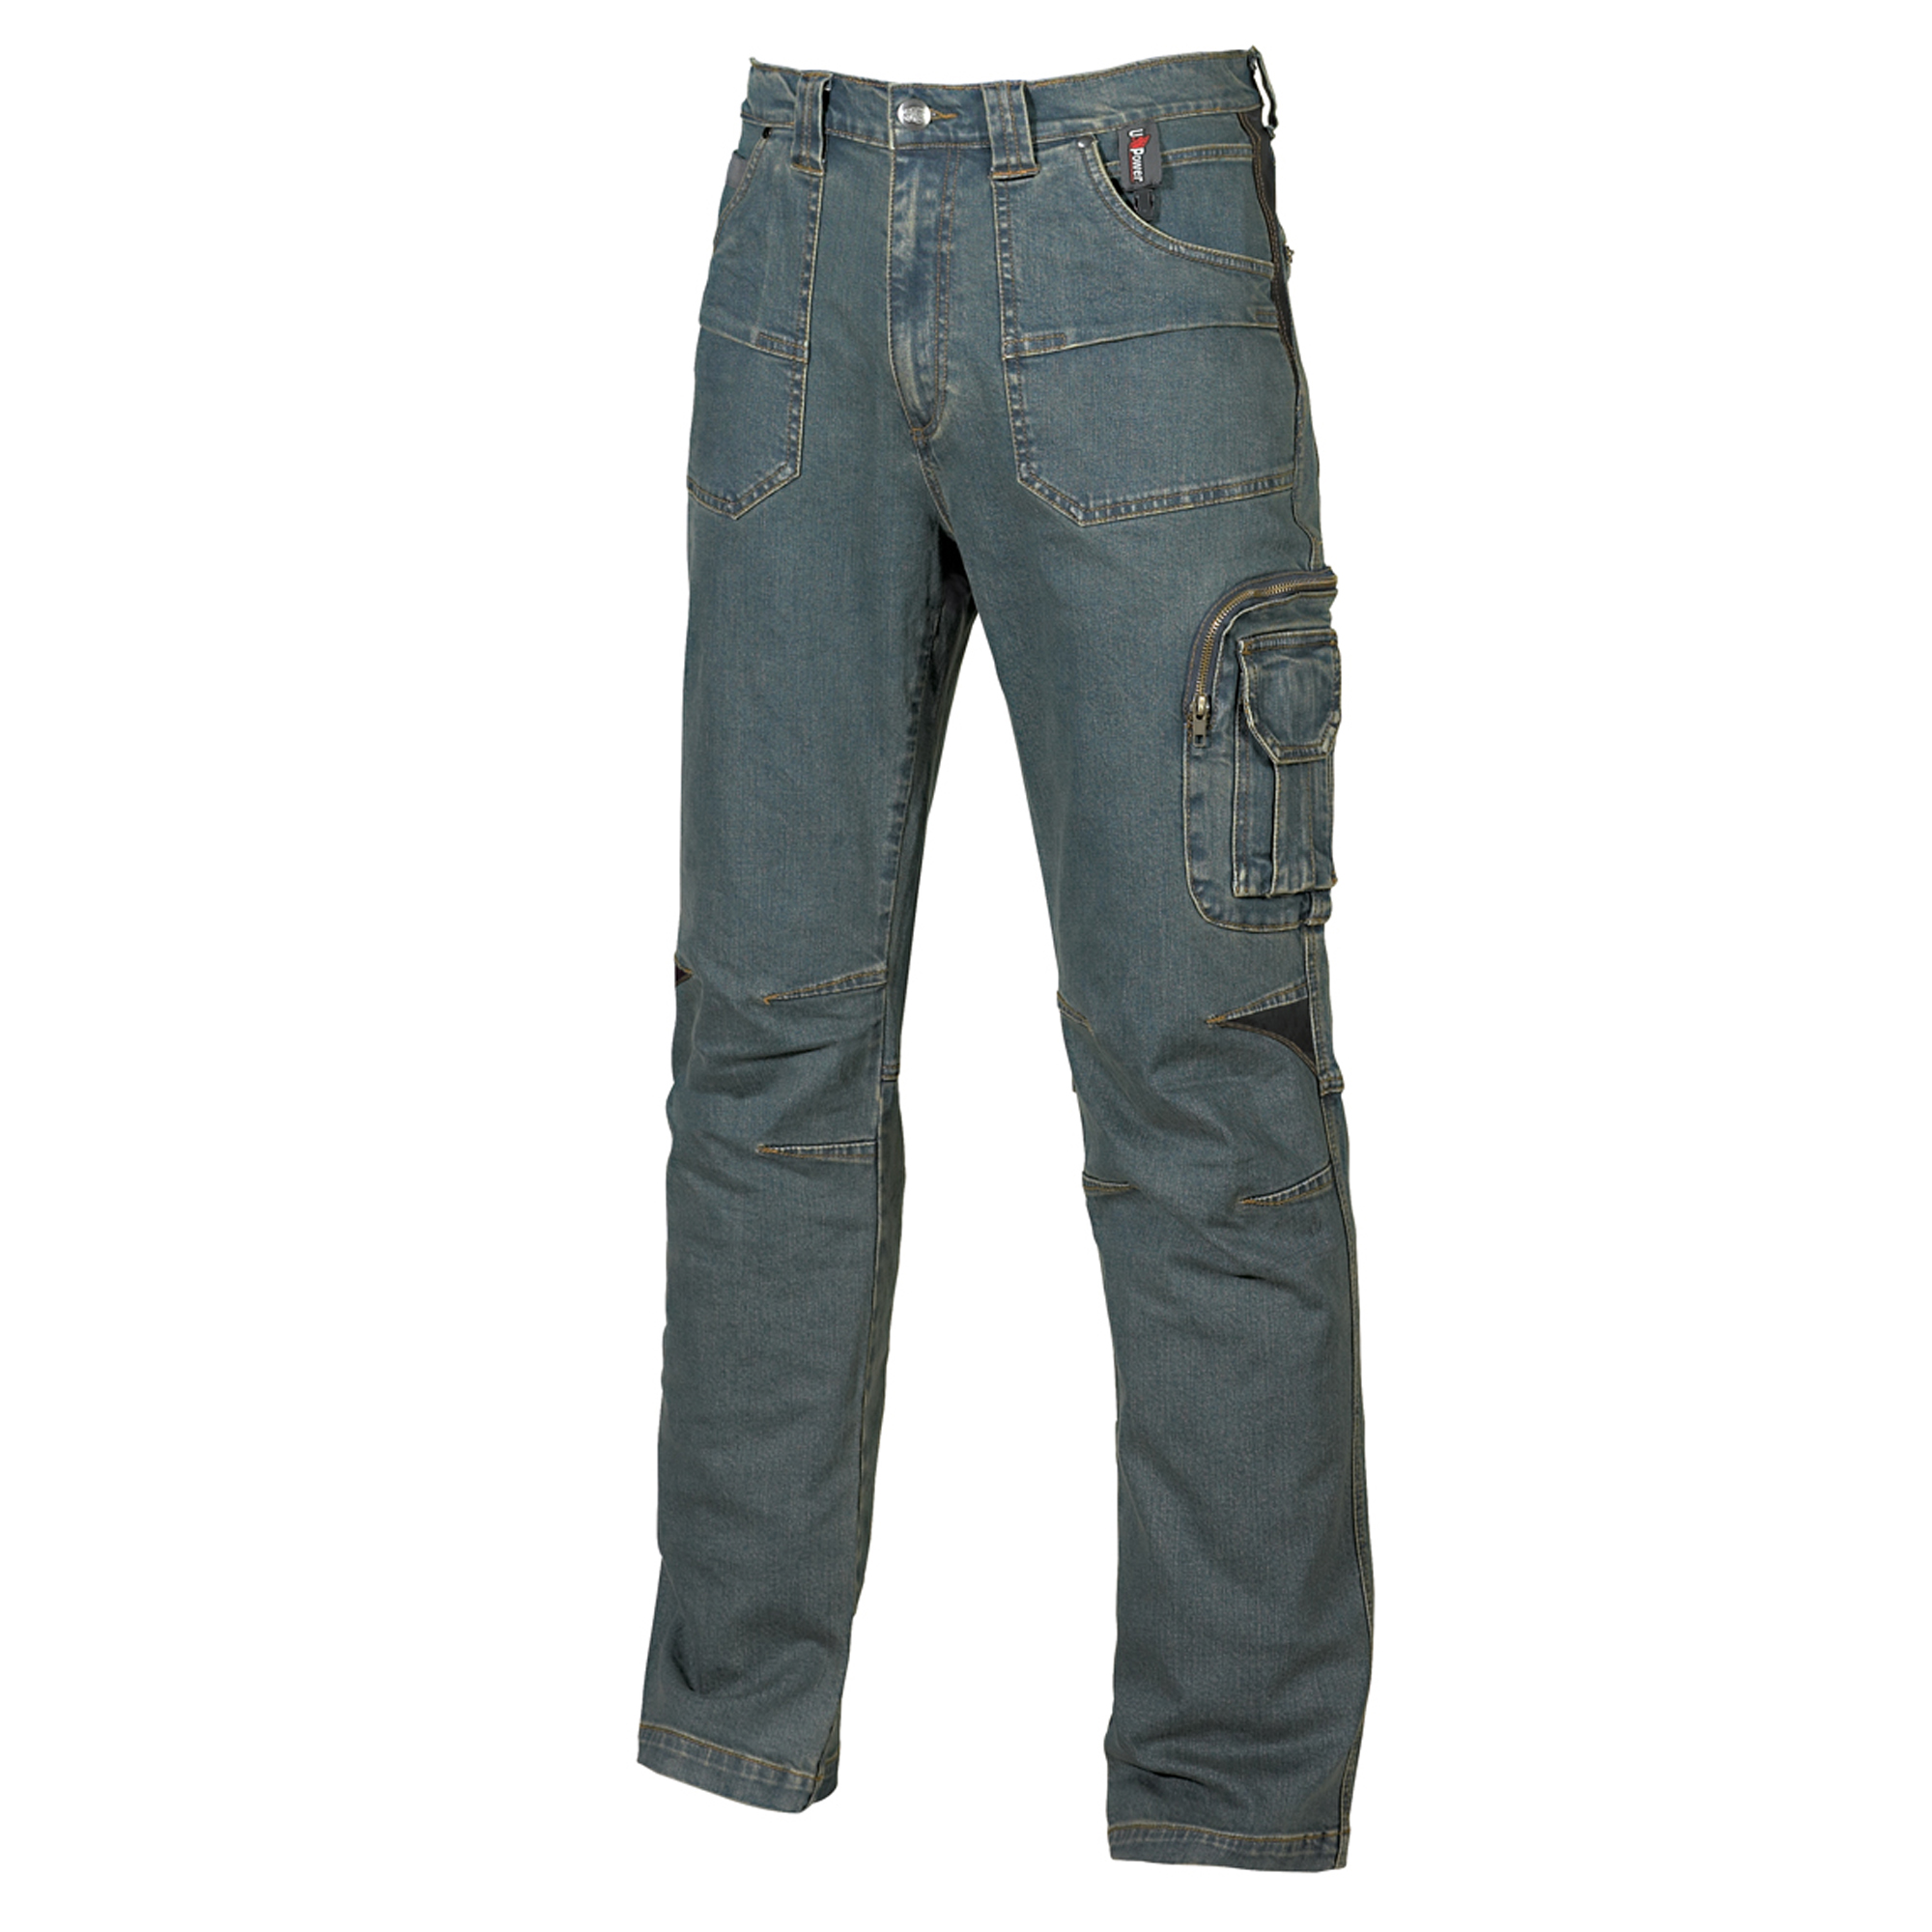 Pantalone da lavoro jeans 4 stagioni traffic tg.48